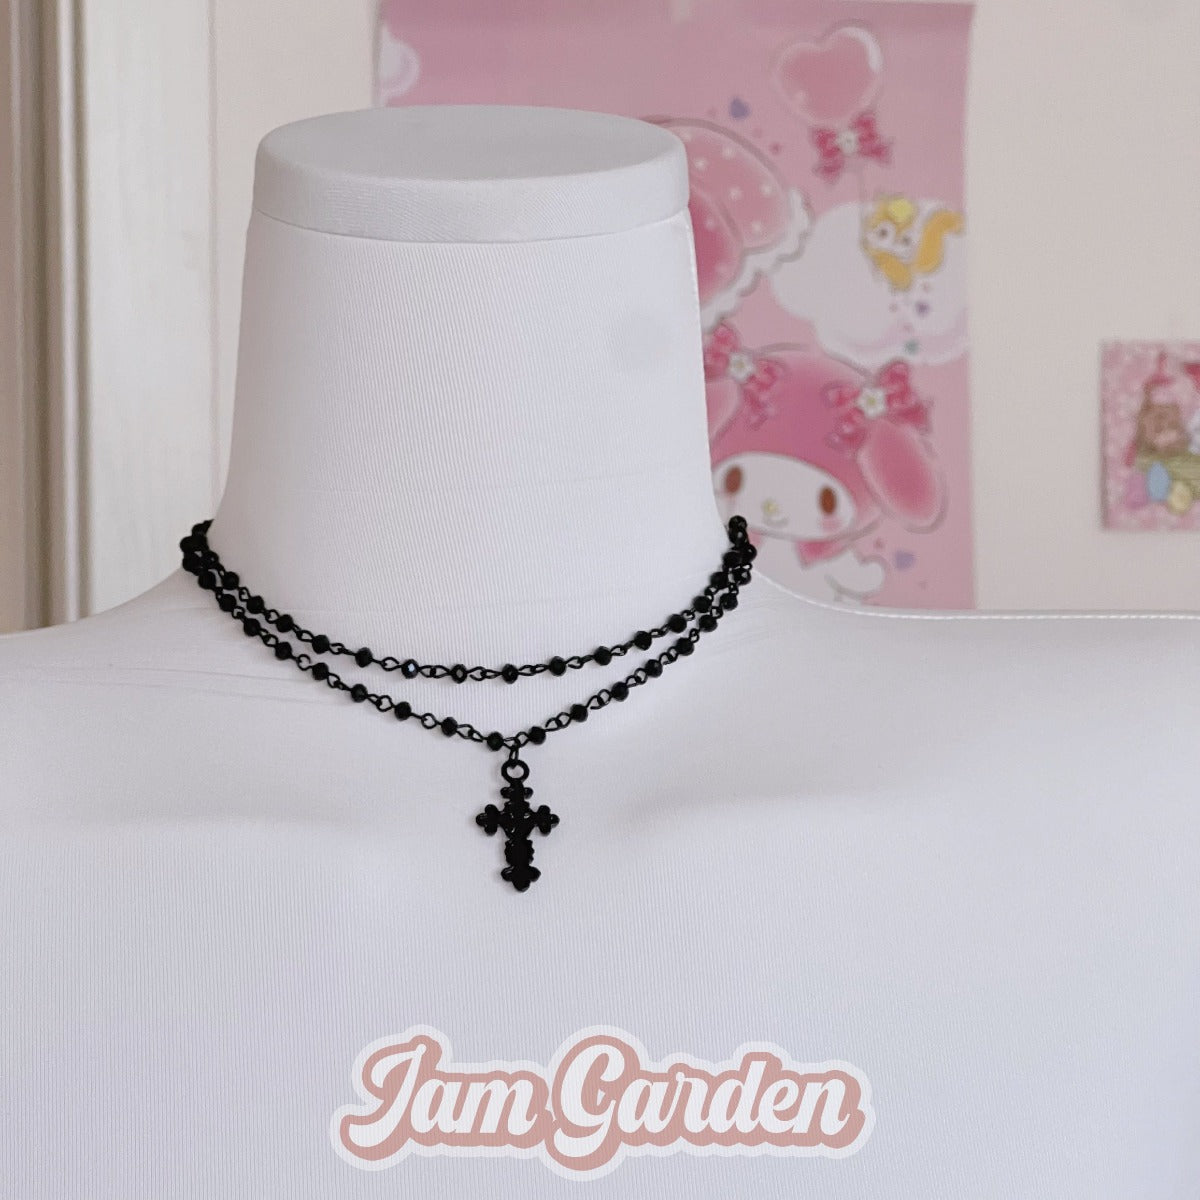 2-Piece Cross Punk Dark Crystal Necklace Set - Jam Garden